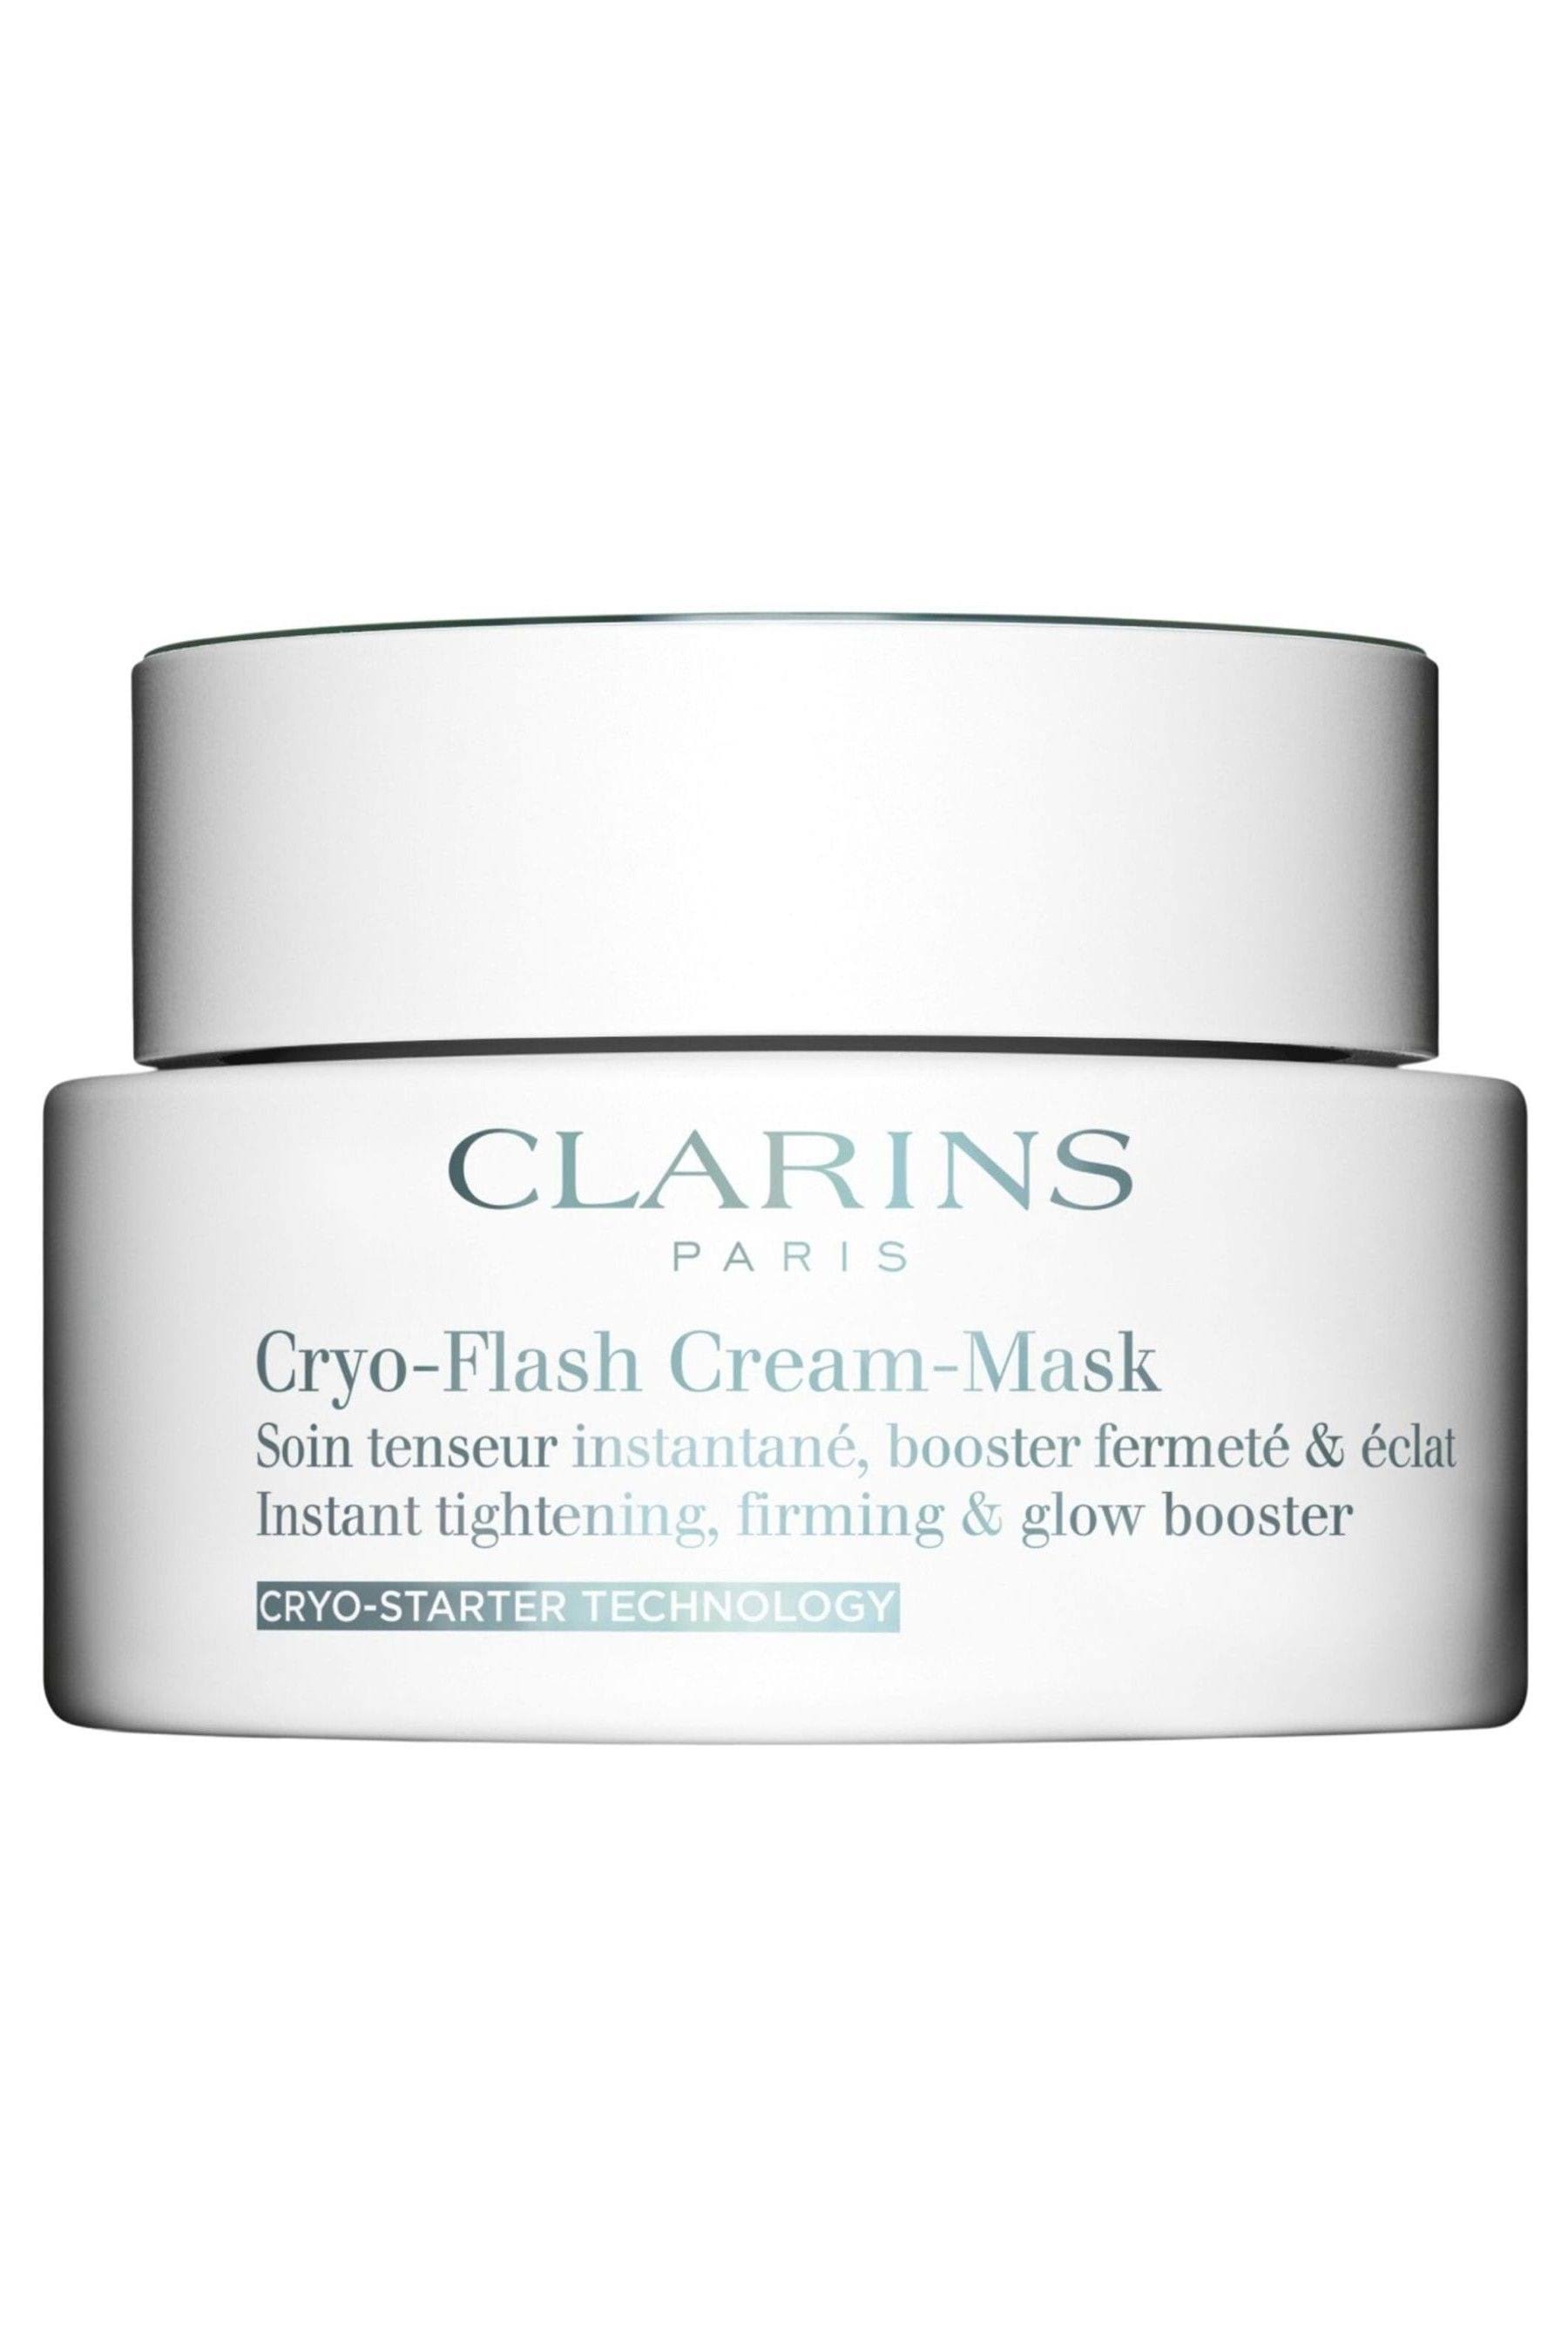 Clarins Cryo-Flash Cream-Mask, 75 ml